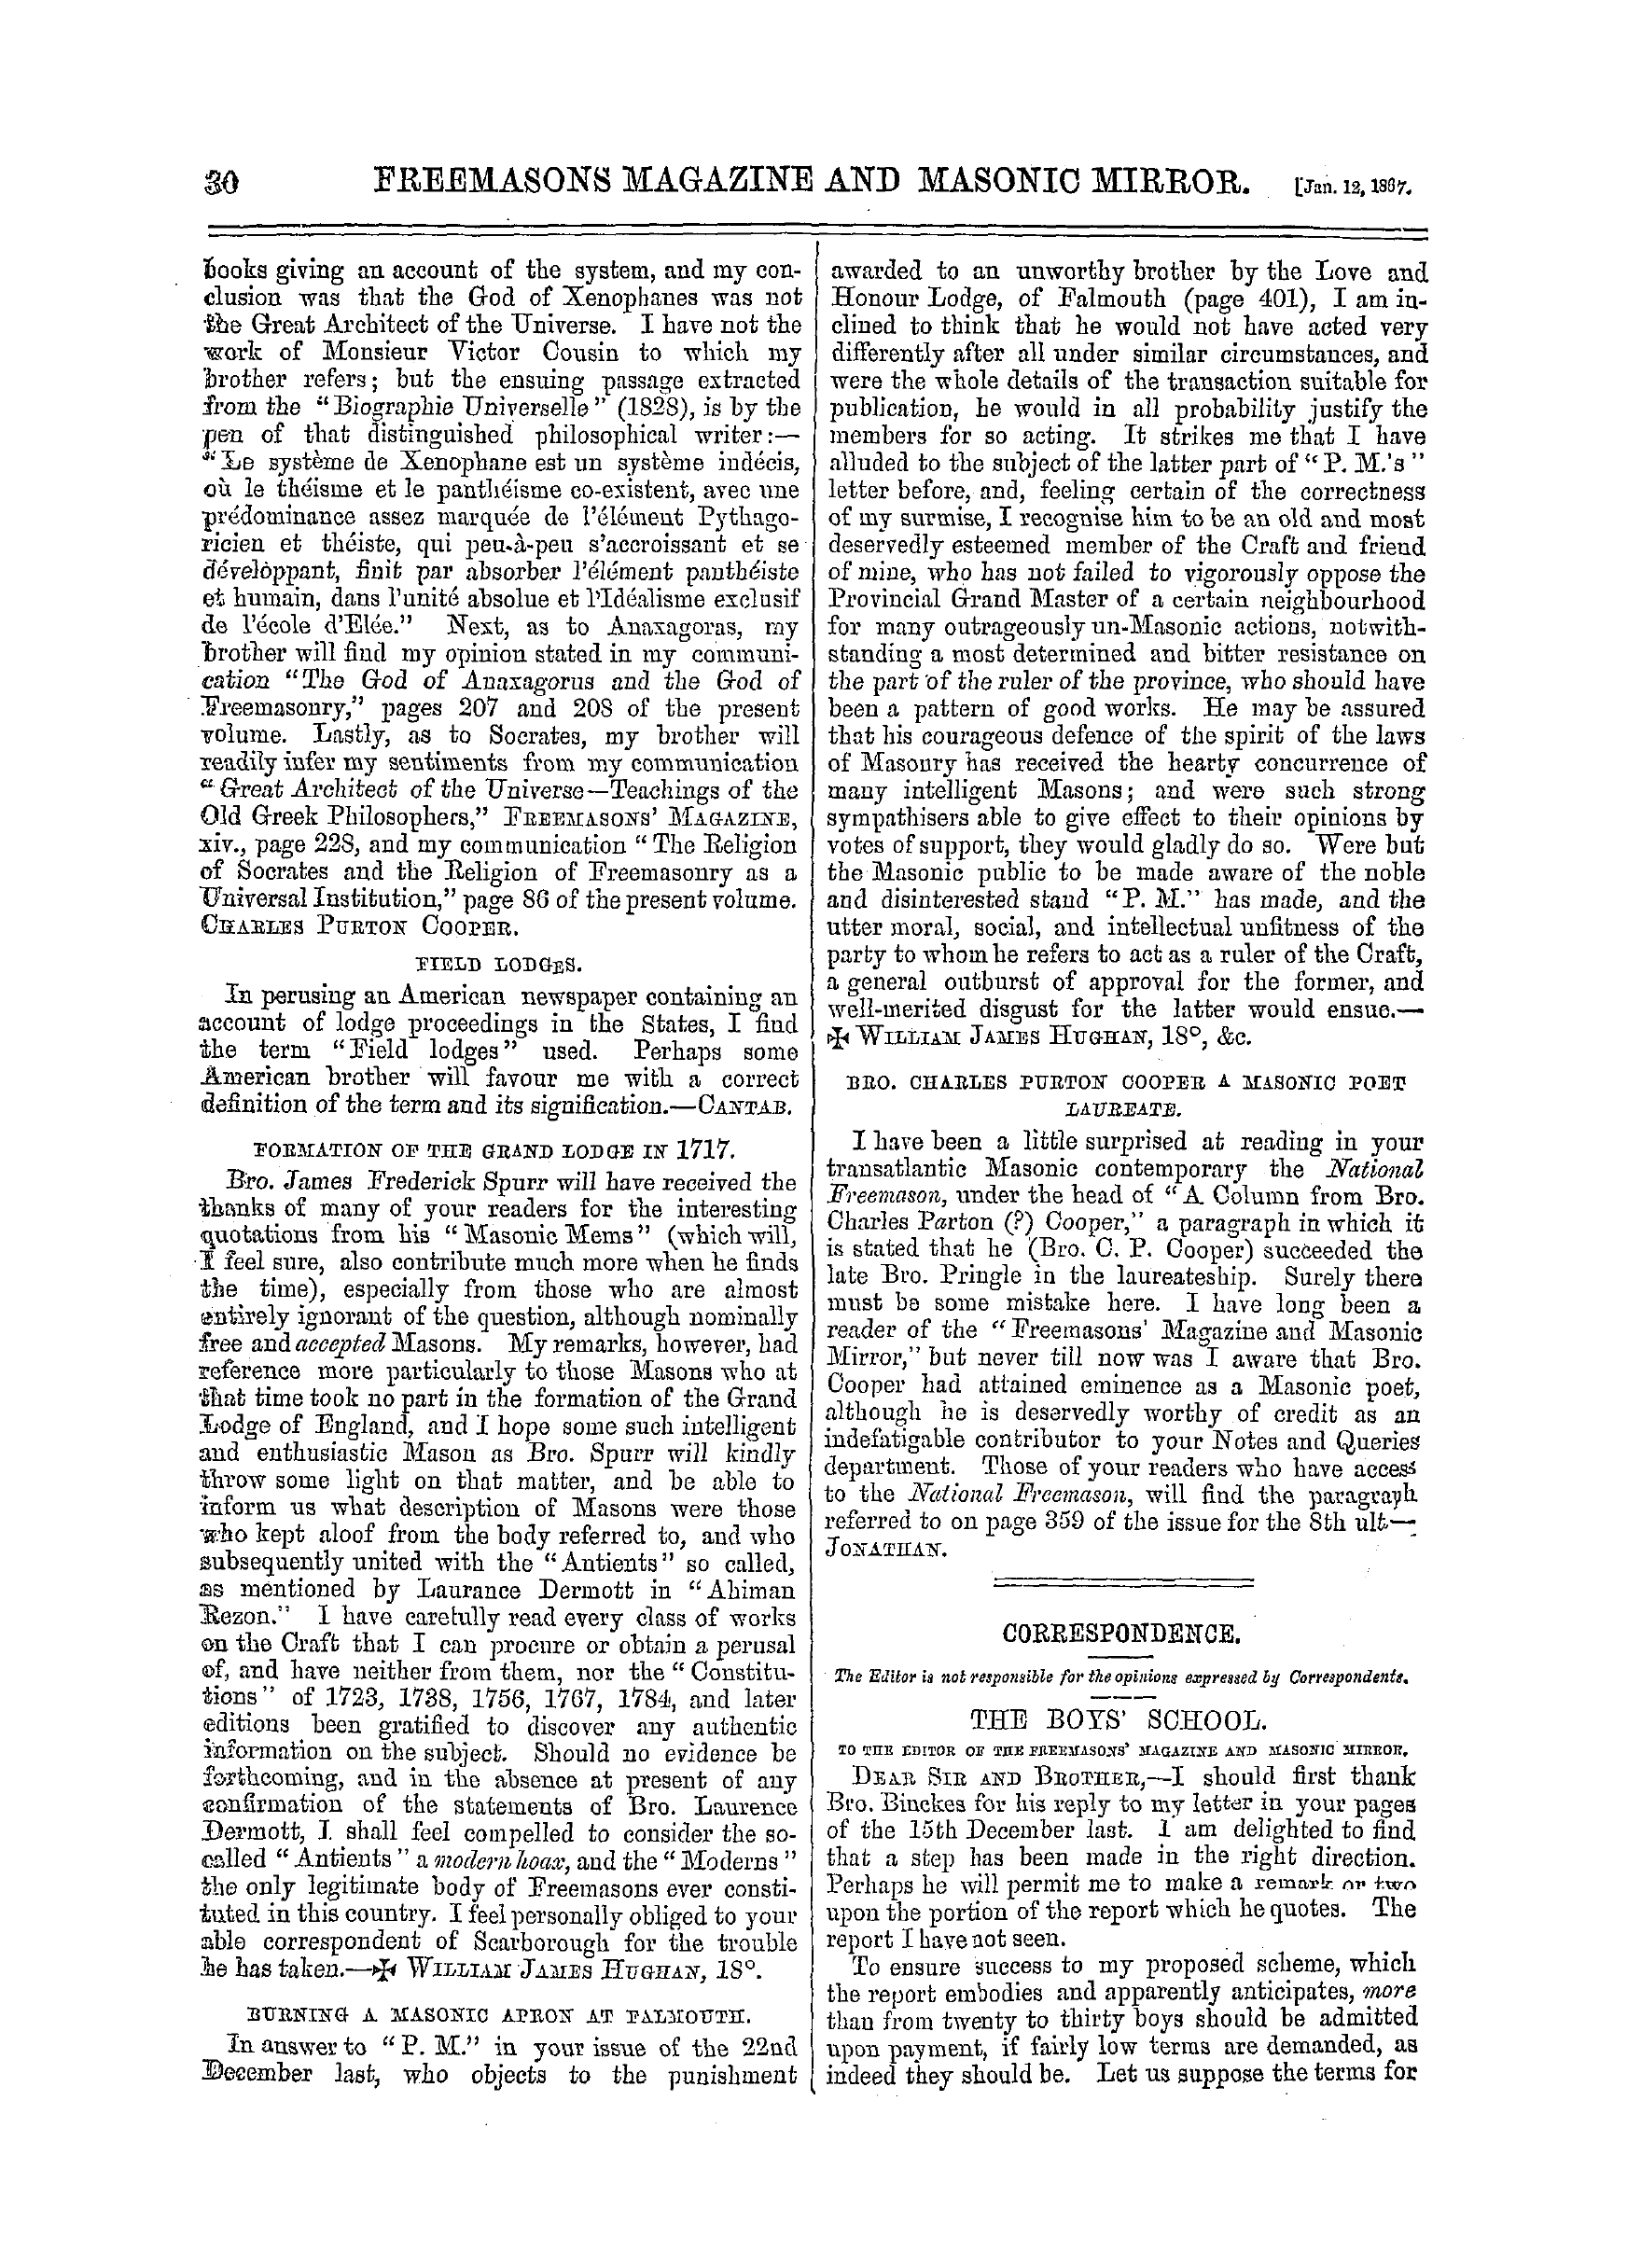 The Freemasons' Monthly Magazine: 1867-01-12 - Correspondence.